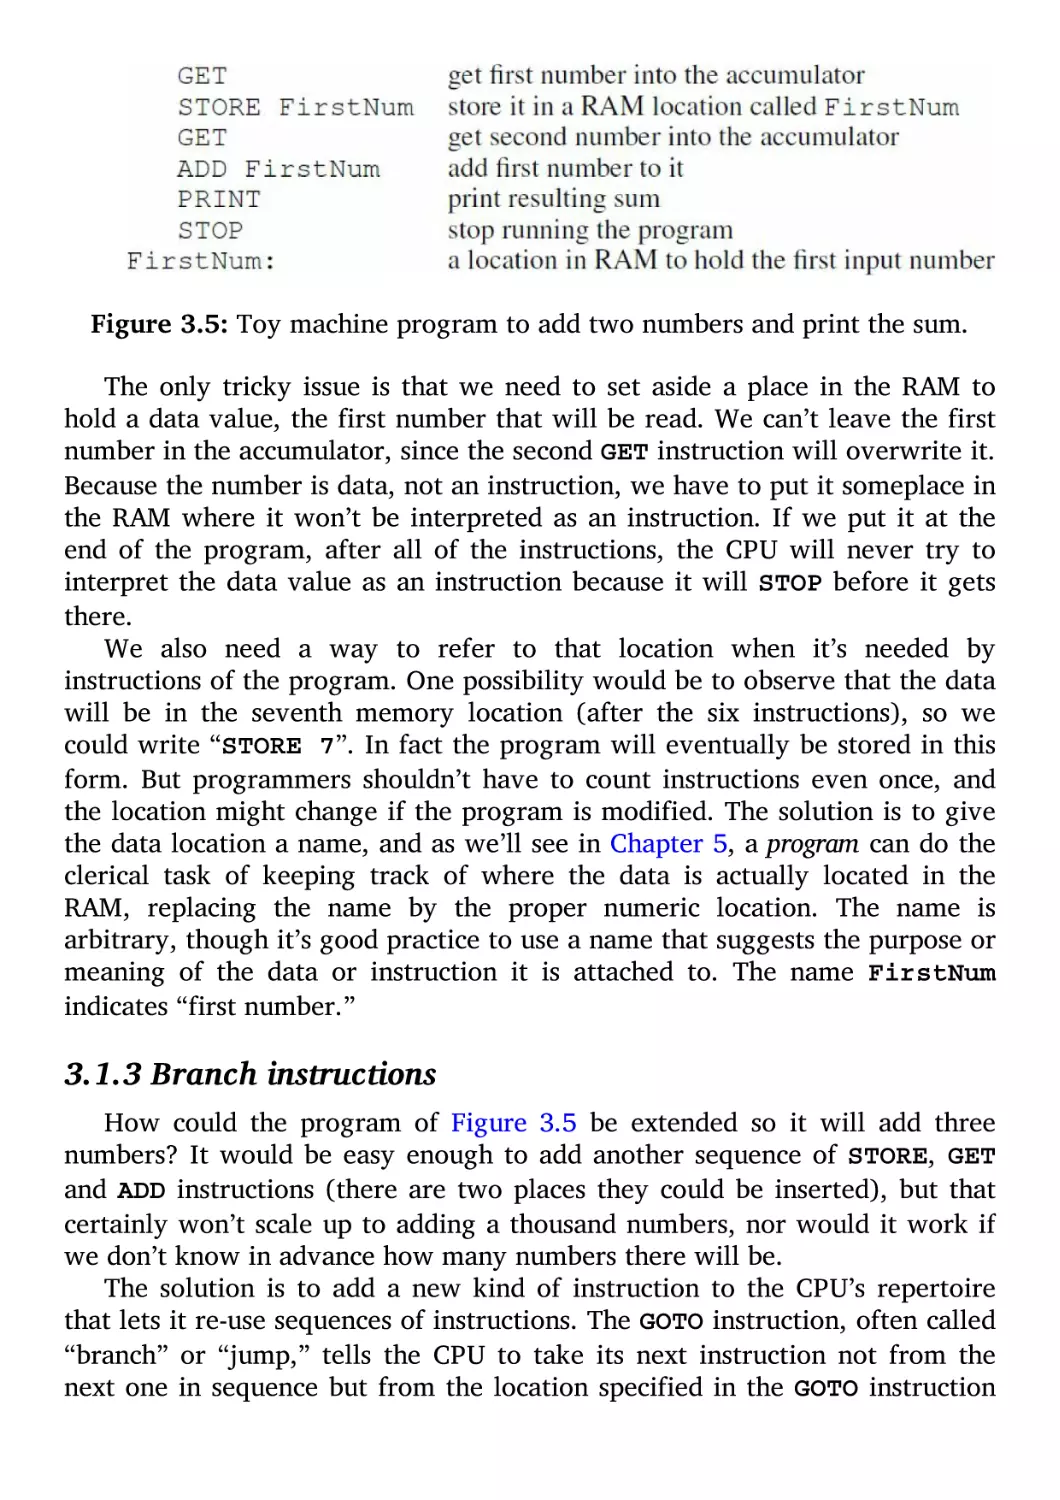 3.1.3 Branch instructions